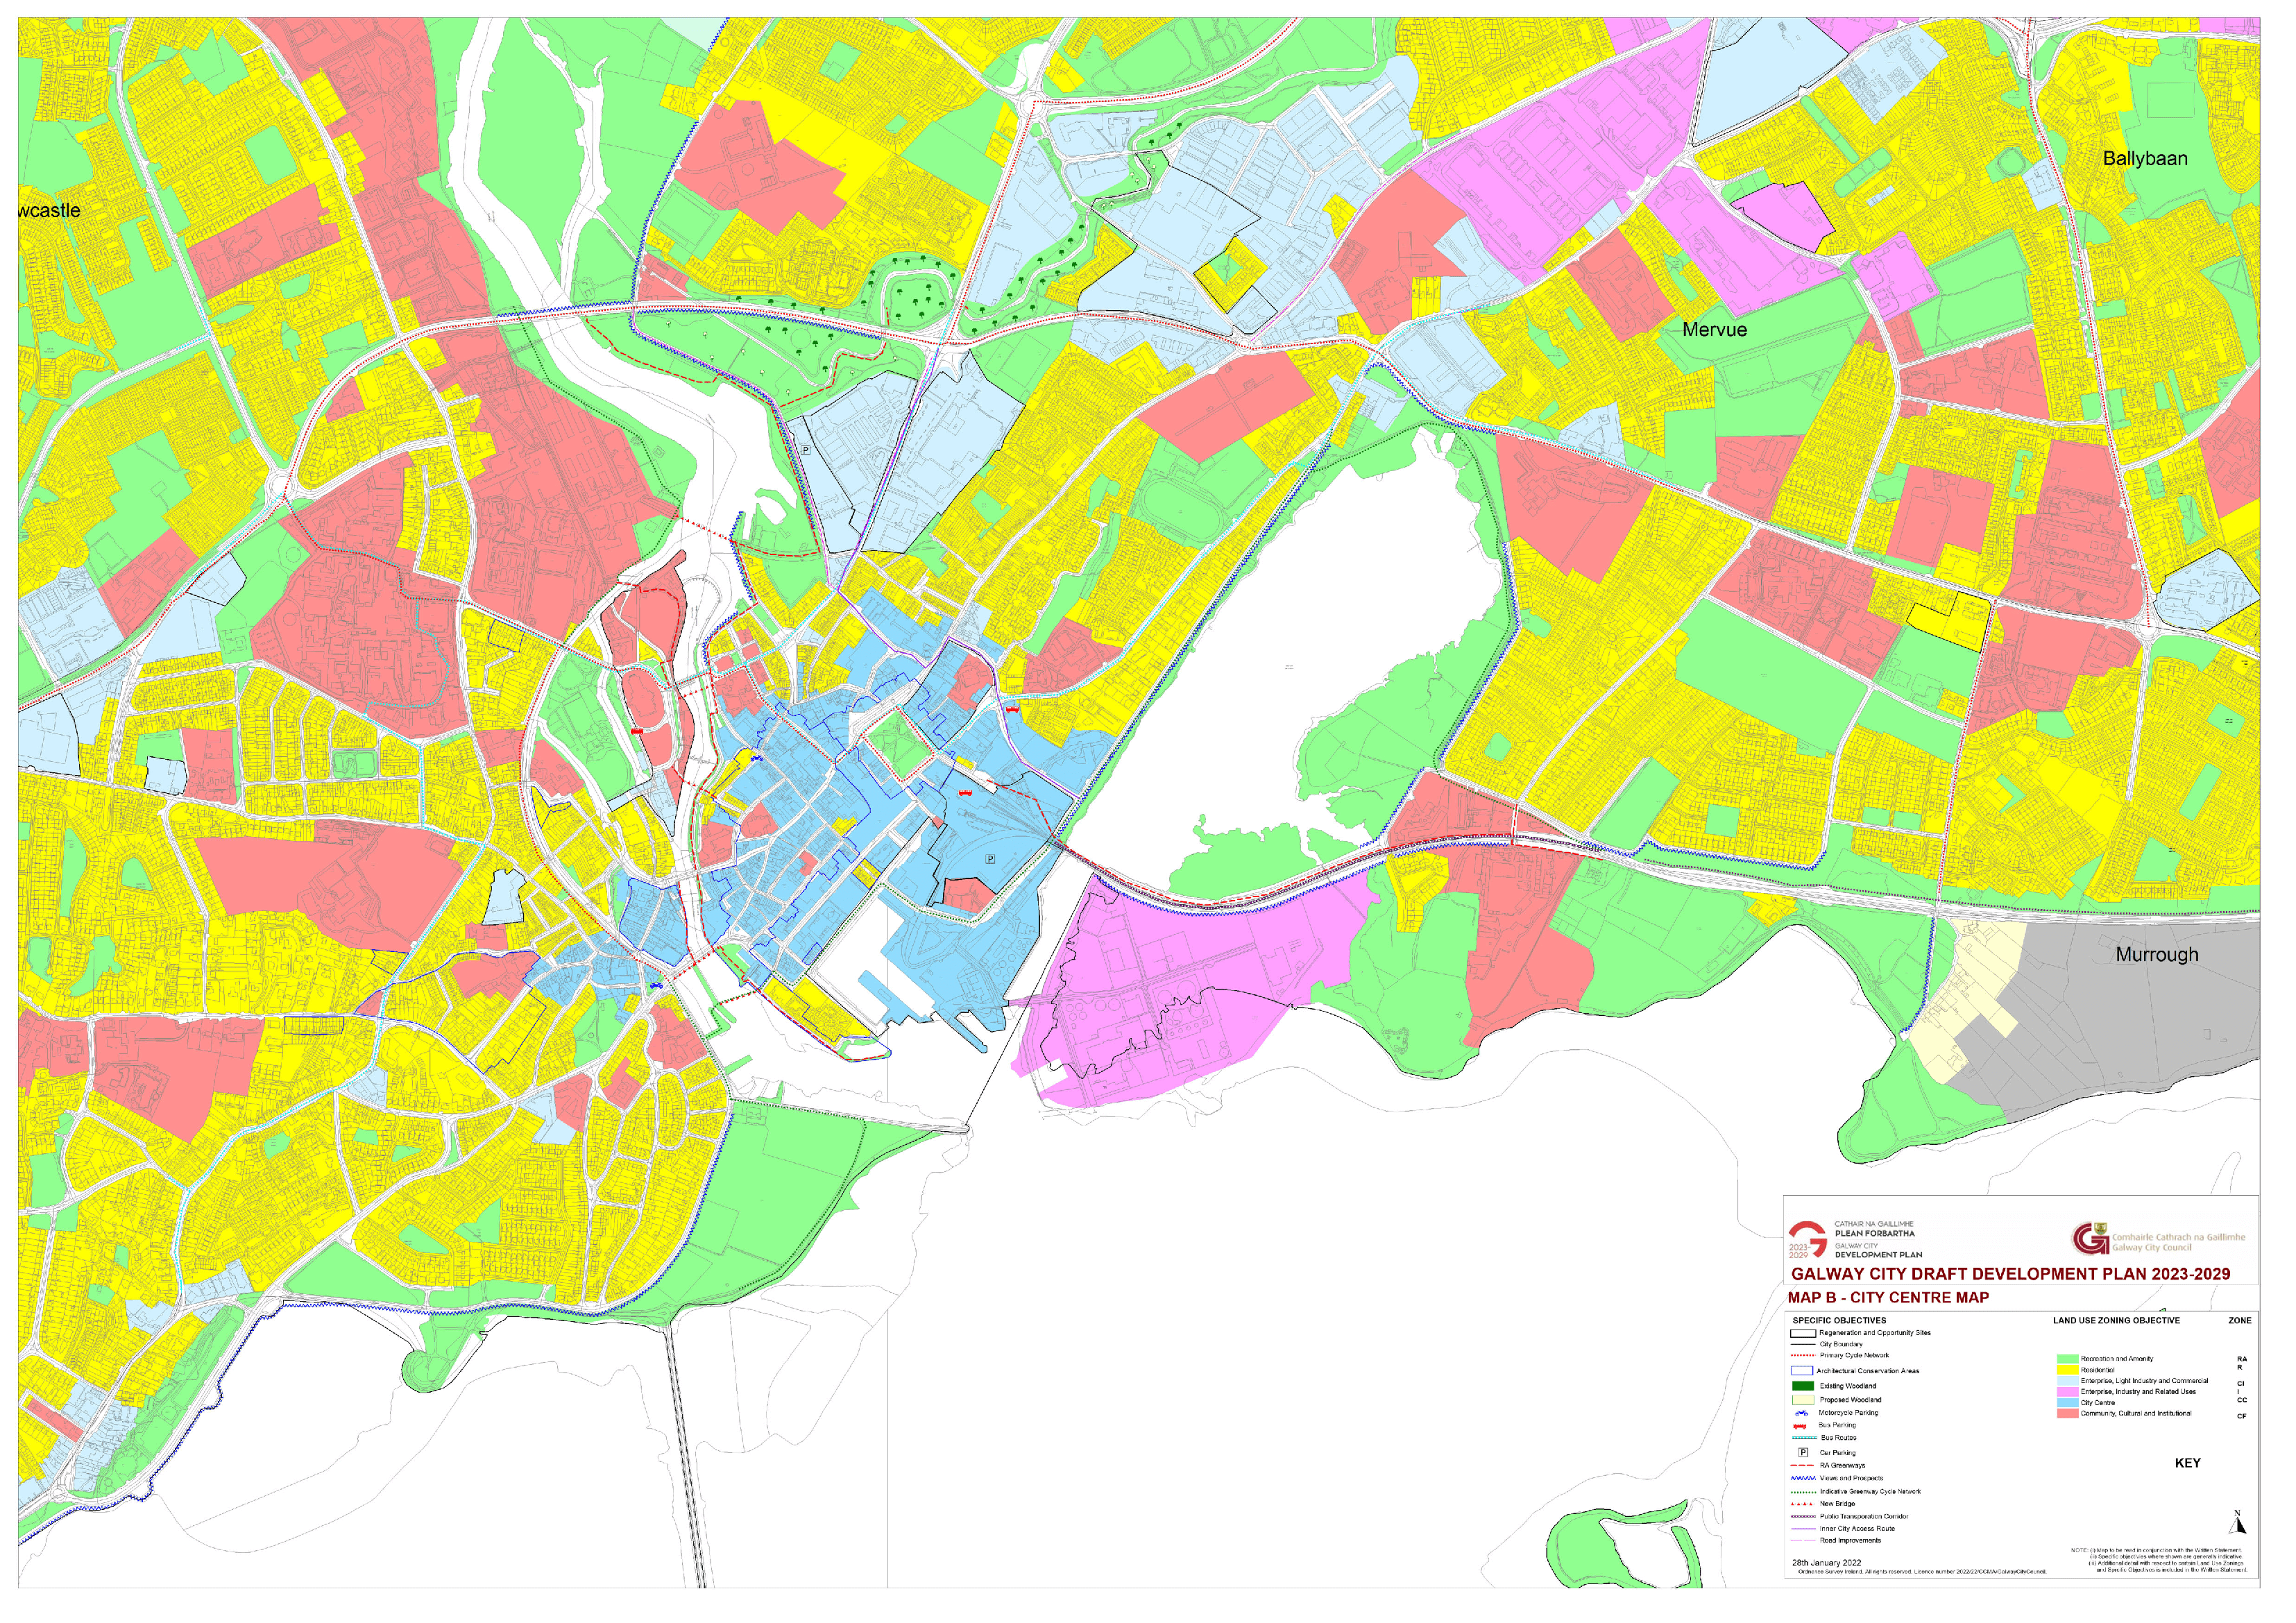 Map B - City Centre Map